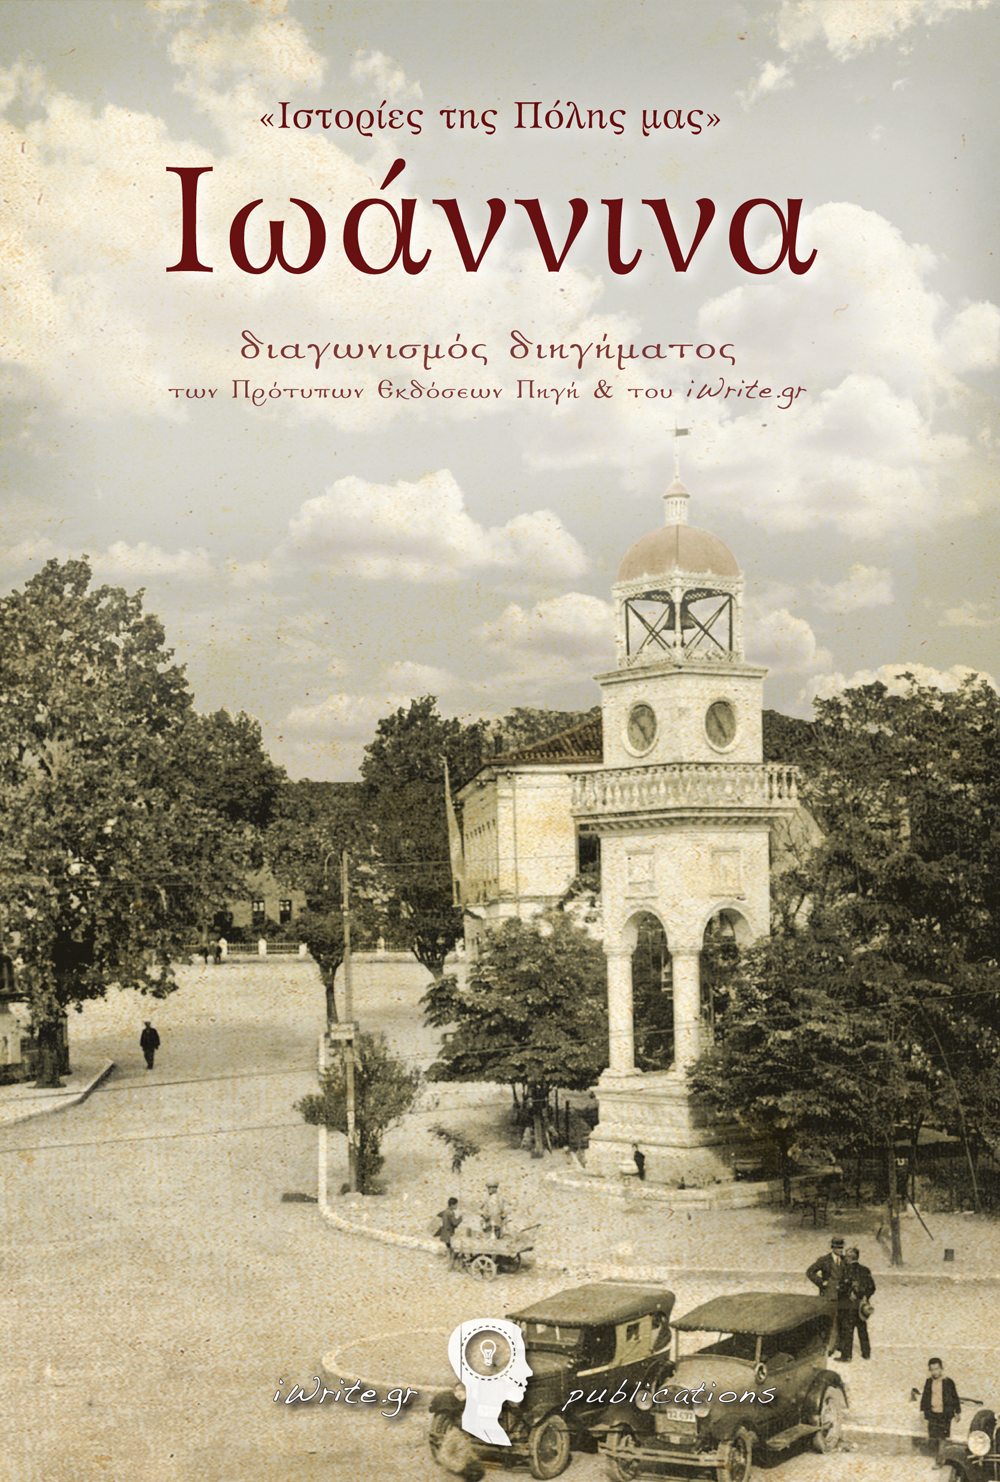 Eξώφυλλο, "Ιστορίες της Πόλης μας" Ιωάννινα, Εκδόσεις iWrite